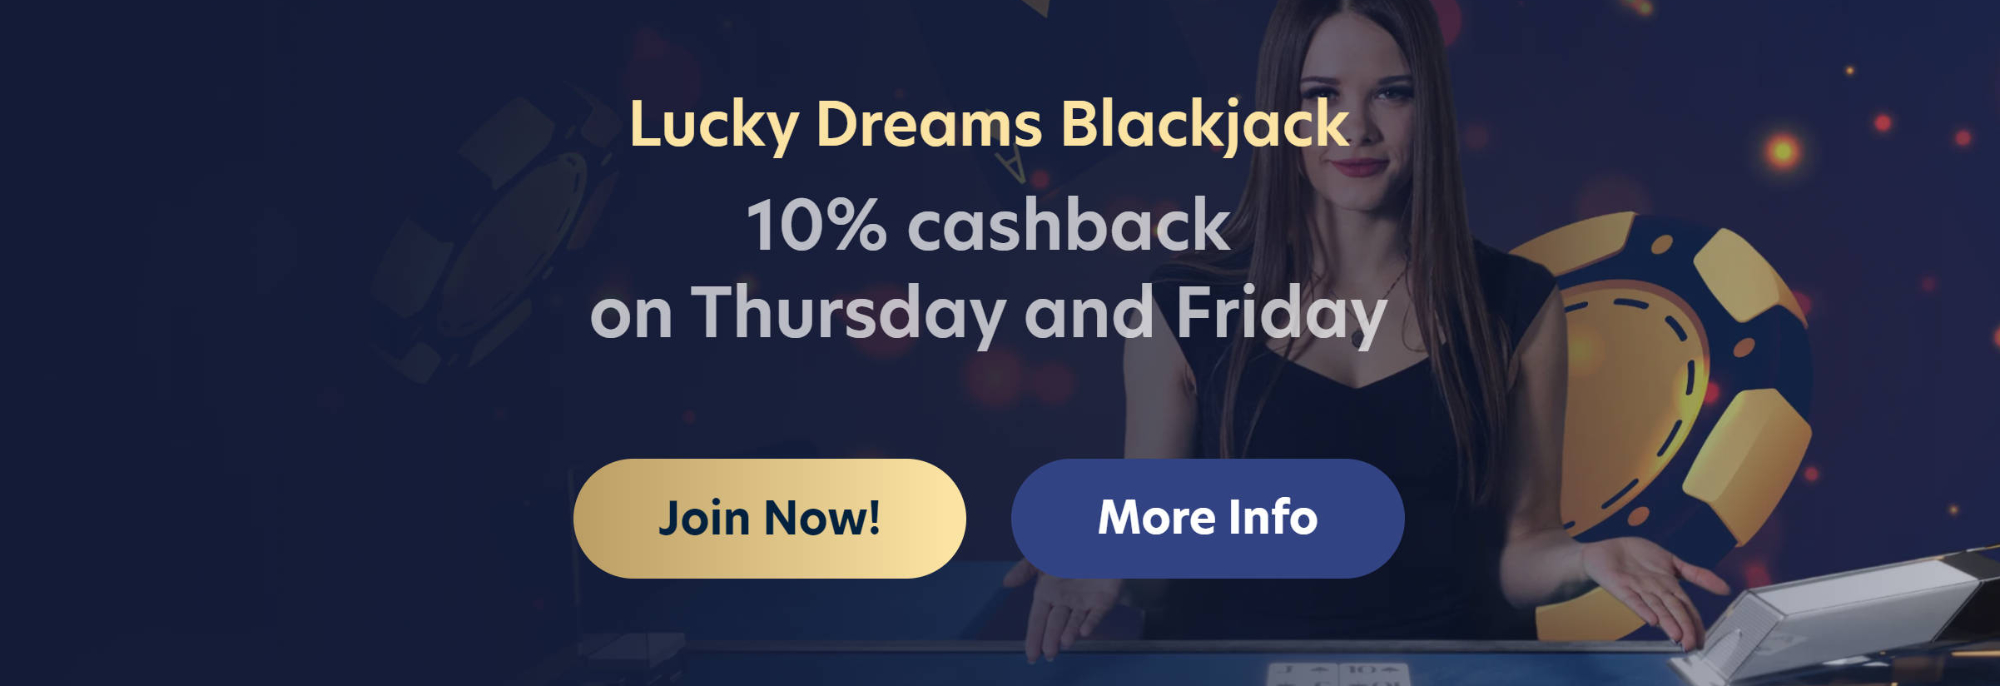 LuckyDreams blackjack offer